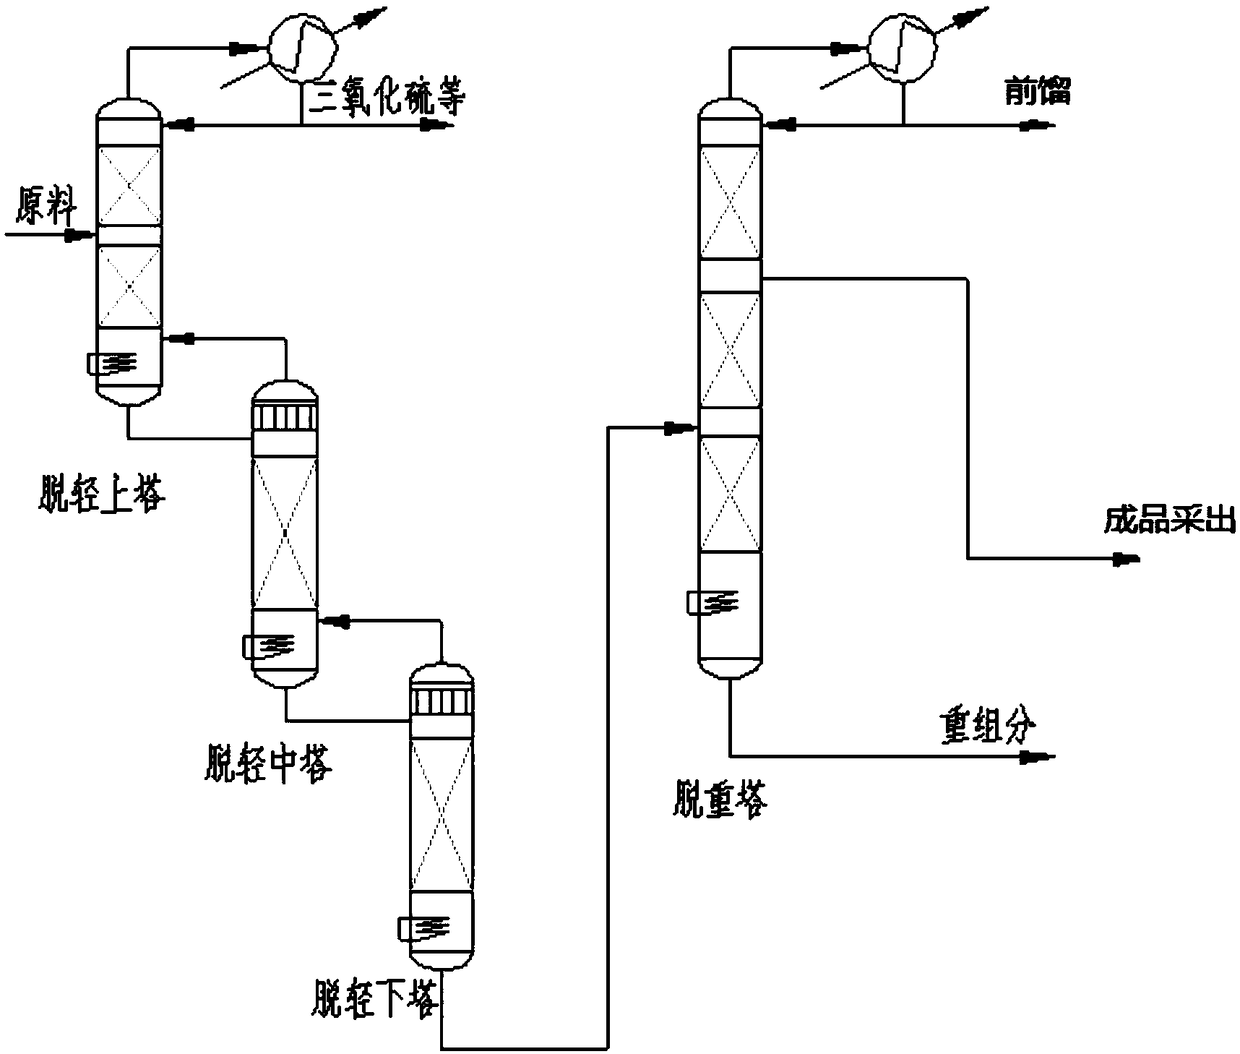 Synthesis method of high-purity chlorosulfonyl isocyanate